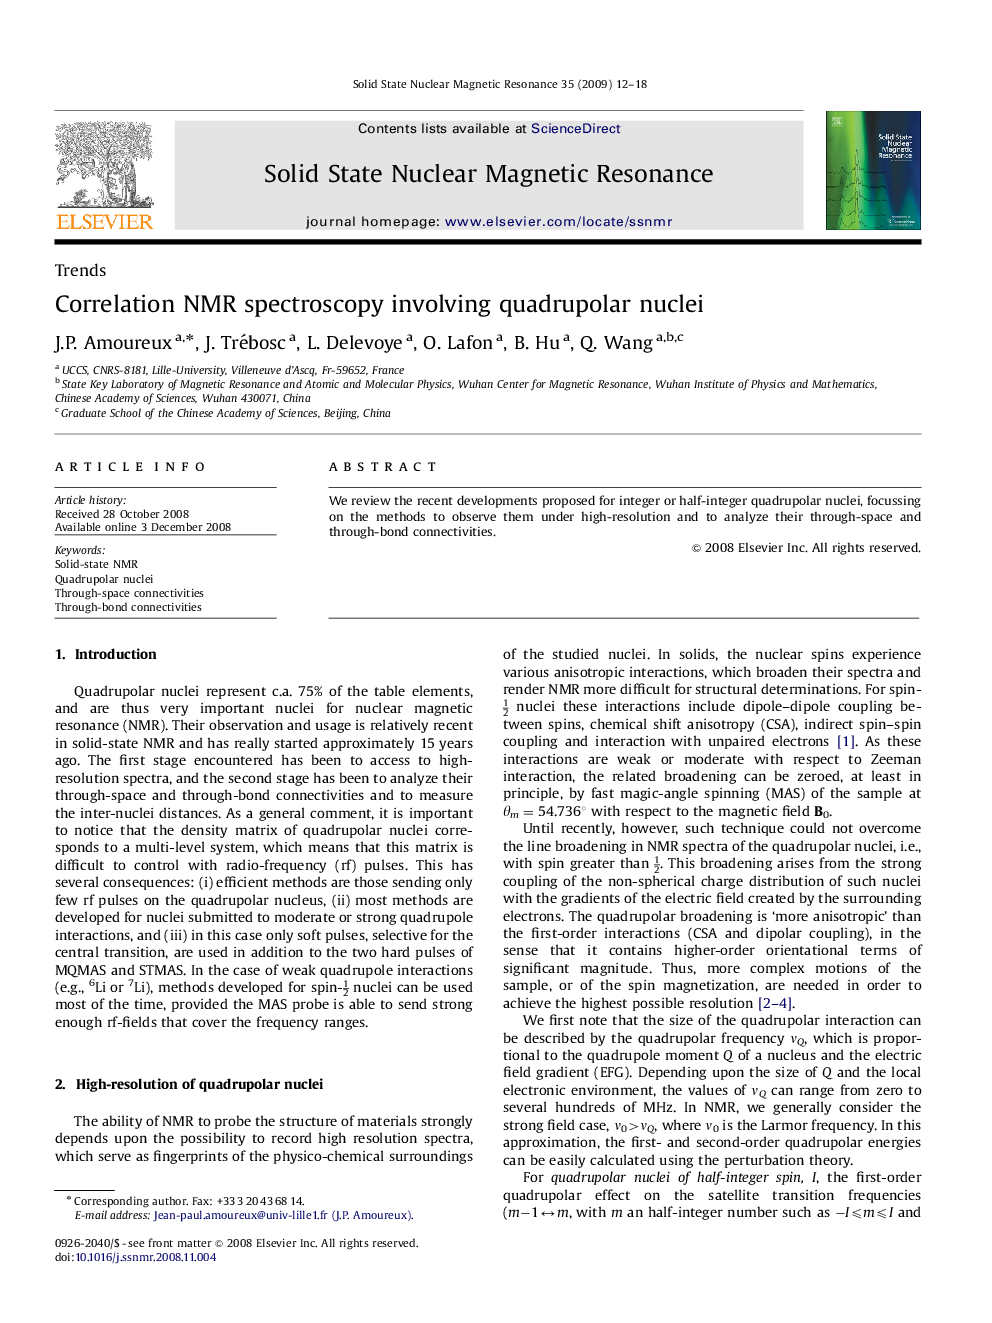 Correlation NMR spectroscopy involving quadrupolar nuclei